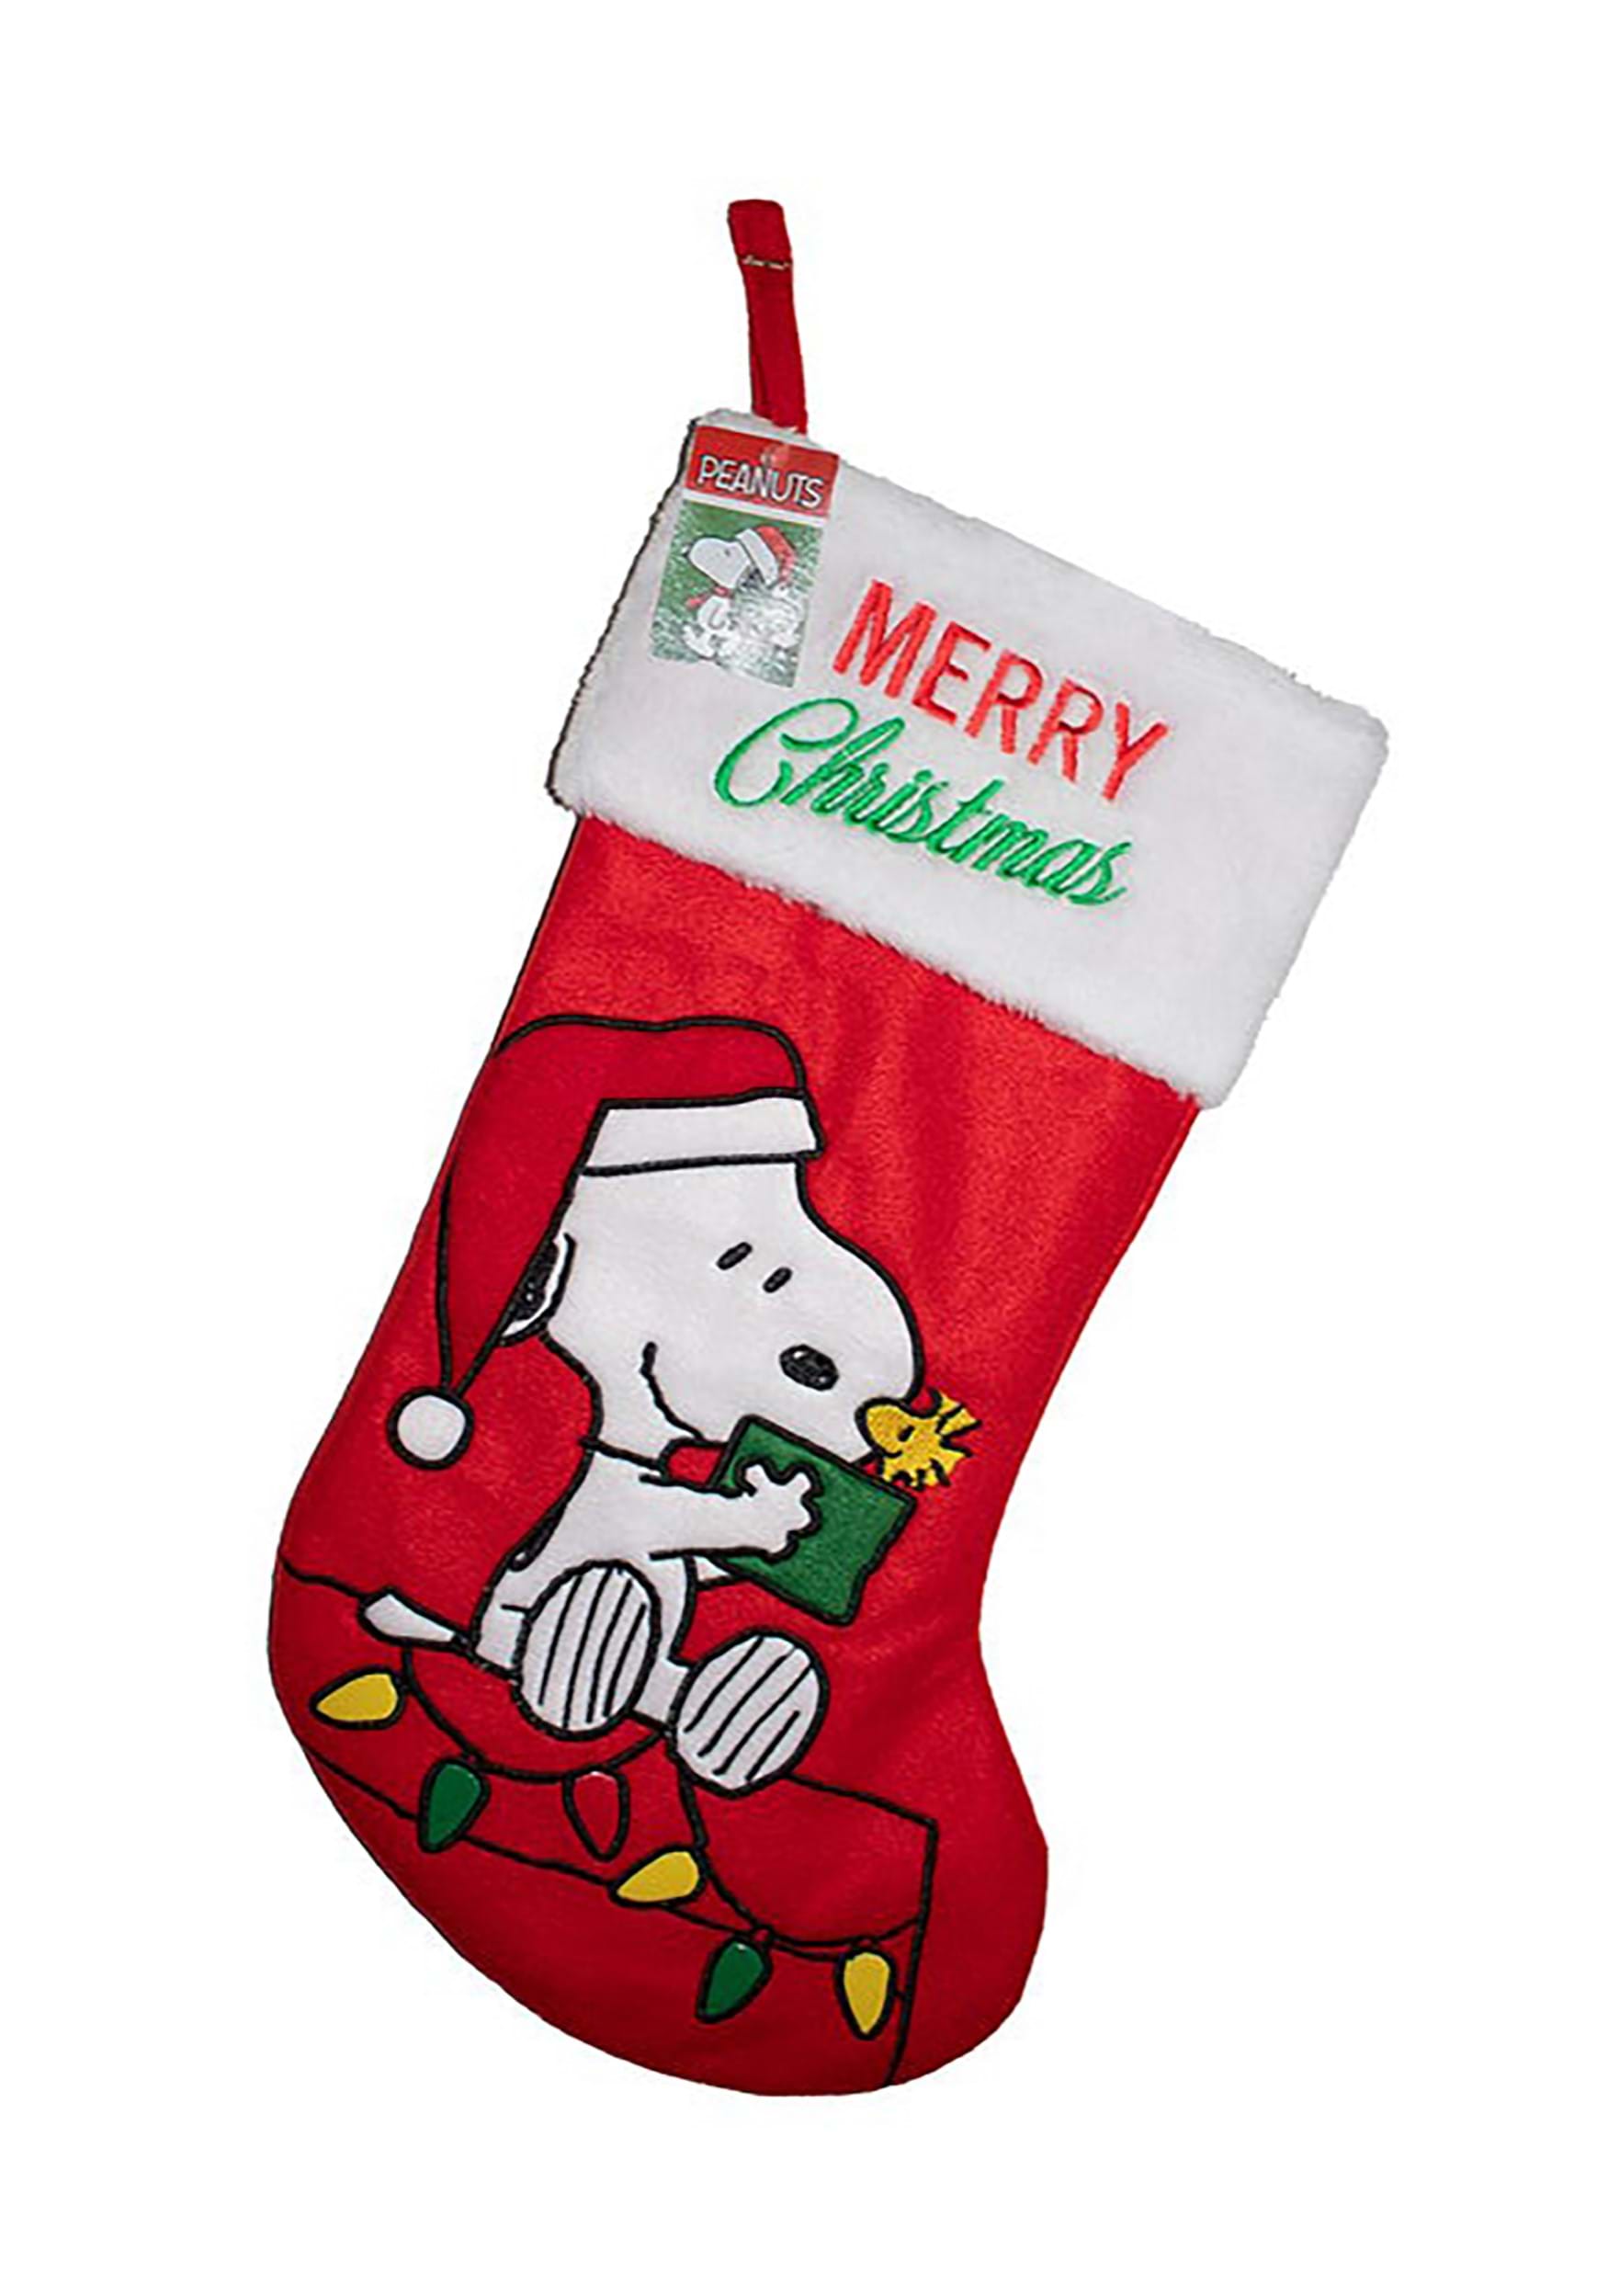 19" Applique Snoopy Christmas Stocking